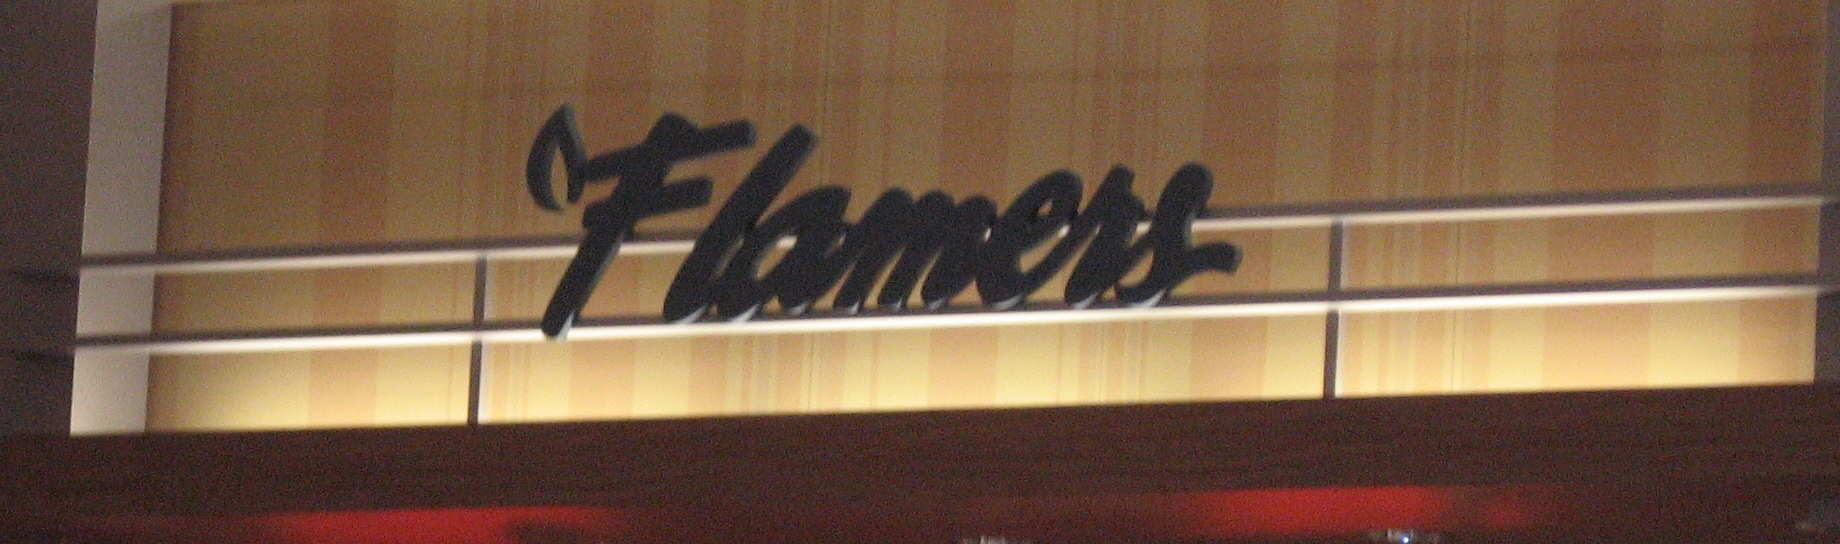 Flamers 2